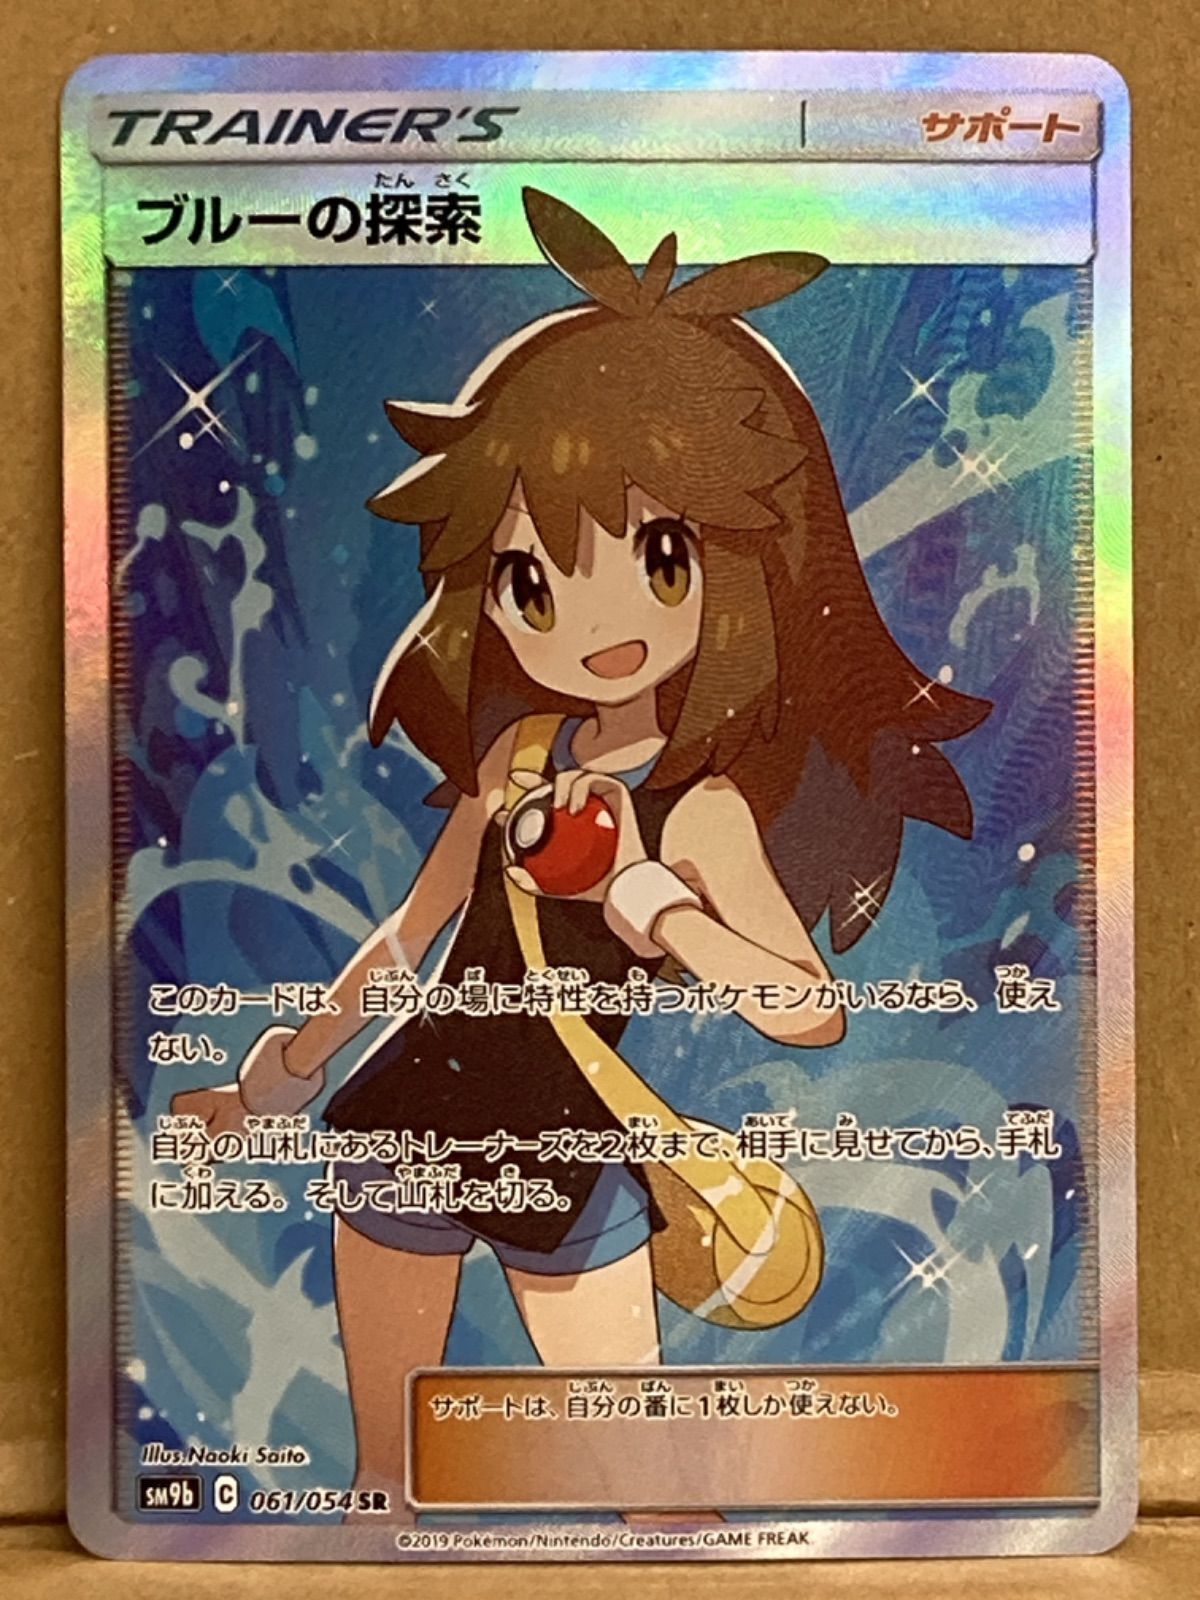 [MP] Green's Exploration SR 061/054 sm9b Pokemon TCG 2019 Japanese